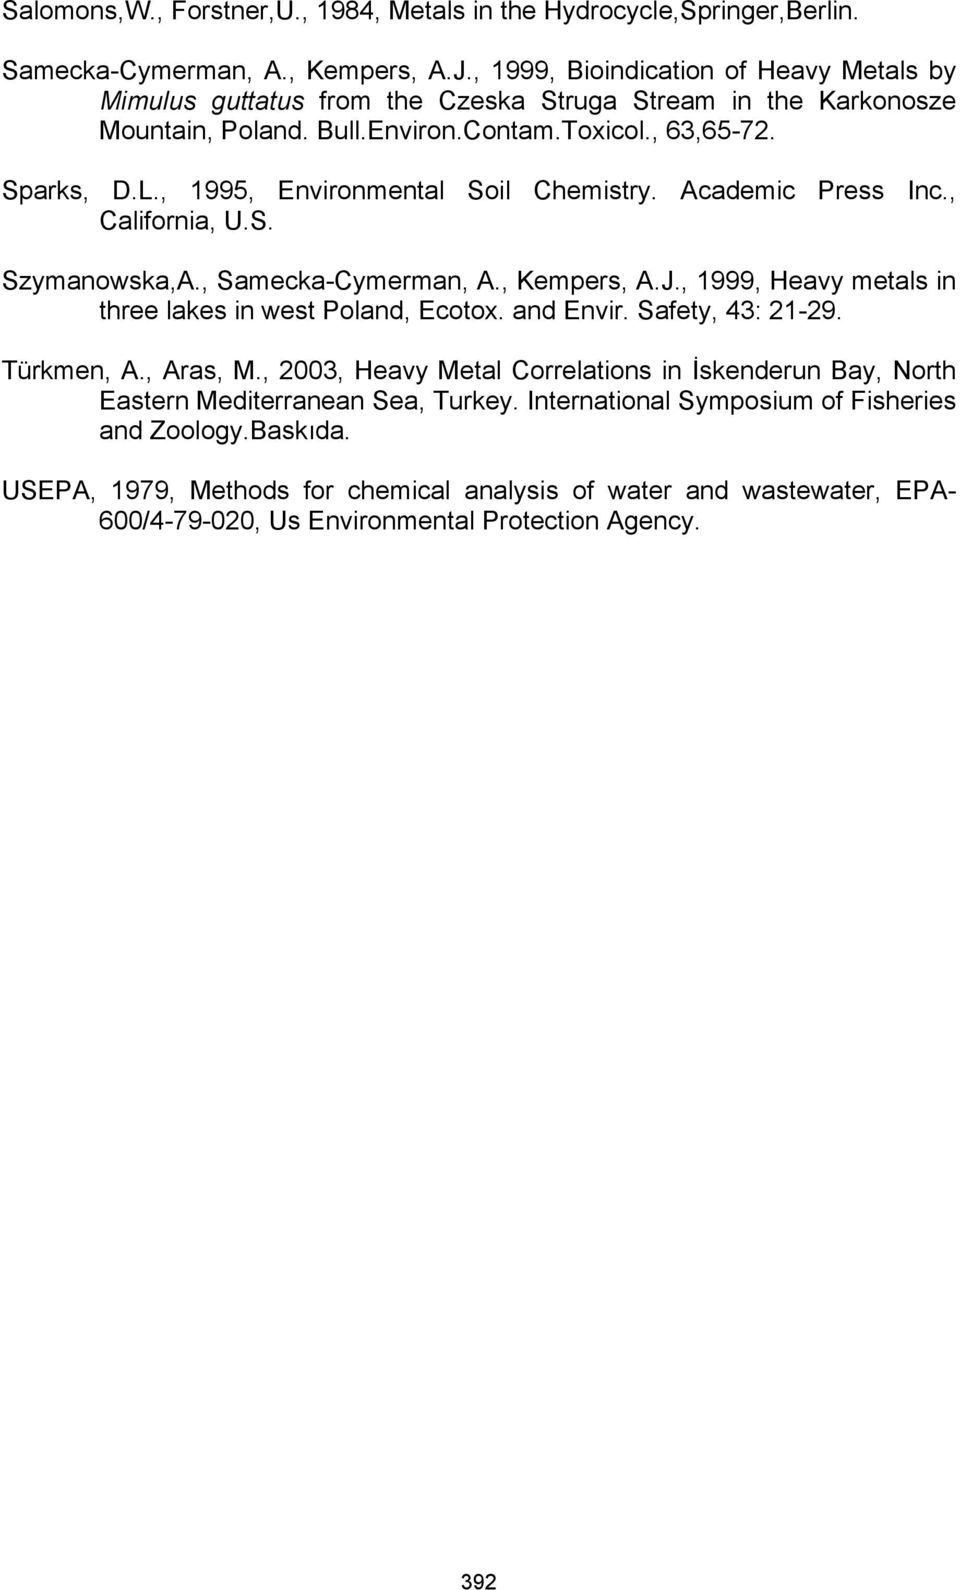 , 1995, Environmental Soil Chemistry. Academic Press Inc., California, U.S. Szymanowska,A., Samecka-Cymerman, A., Kempers, A.J., 1999, Heavy metals in three lakes in west Poland, Ecotox. and Envir.